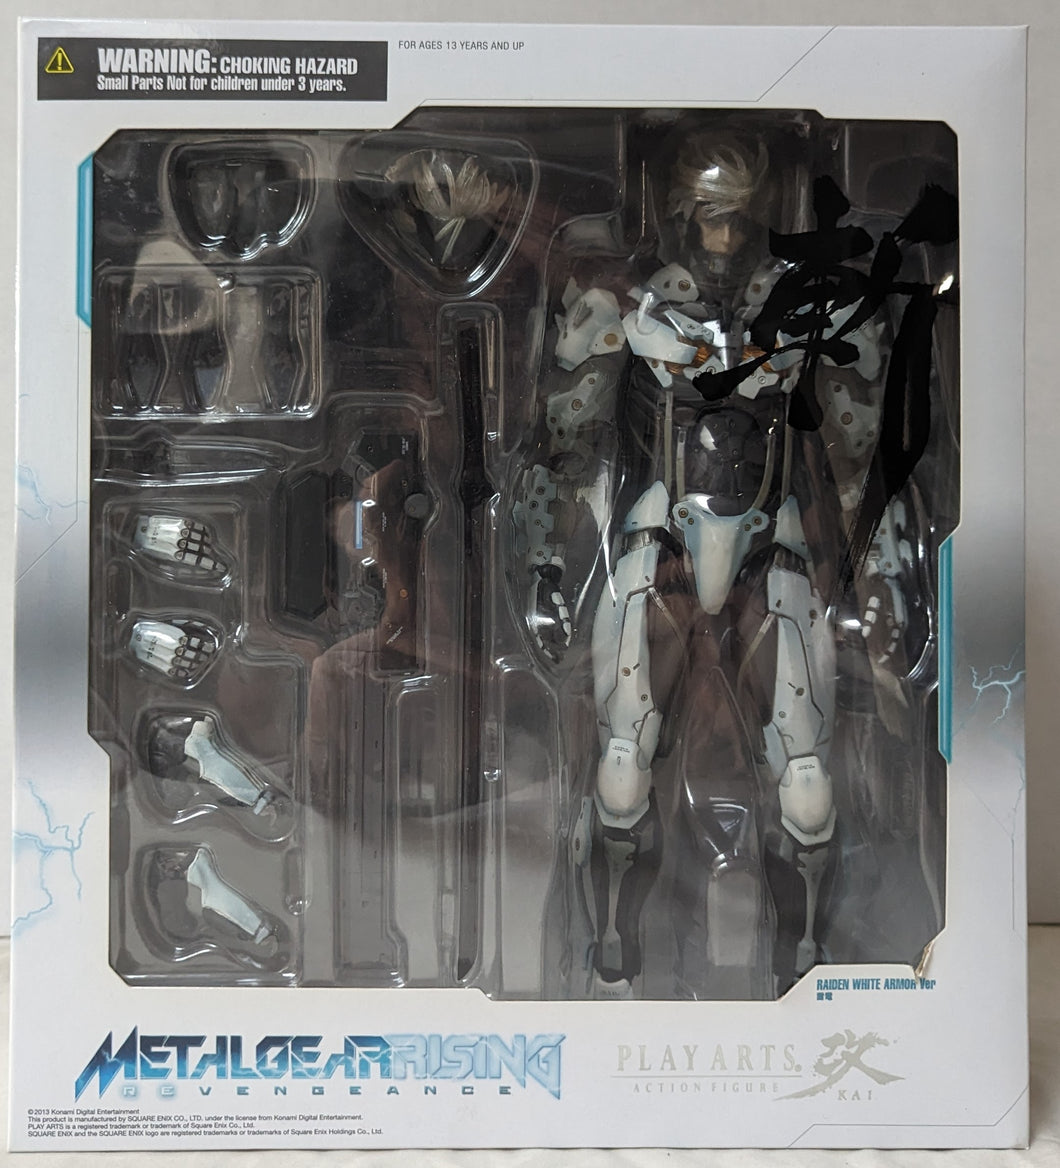 Play Arts Kai Metal Gear Rising Revengeance Raiden White Armor Action Figure